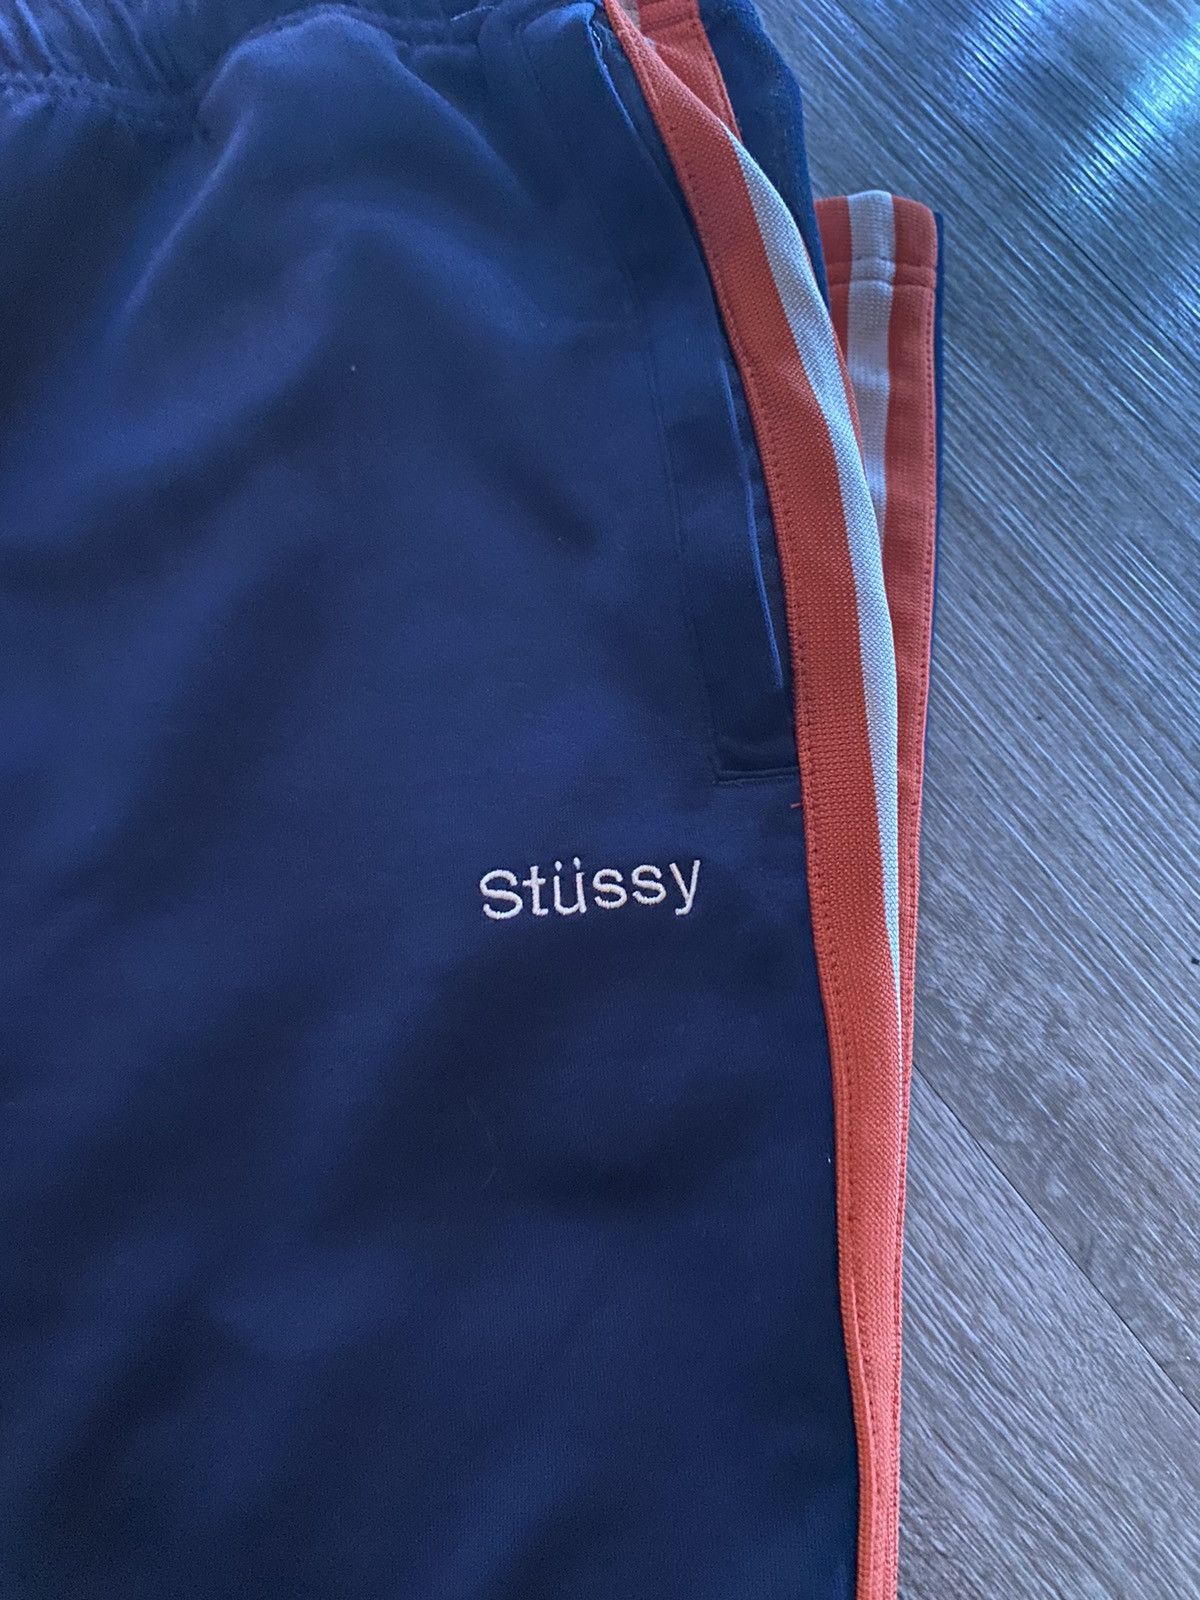 Stussy Stussy Side Stripe Track Pants Size US 30 / EU 46 - 3 Thumbnail